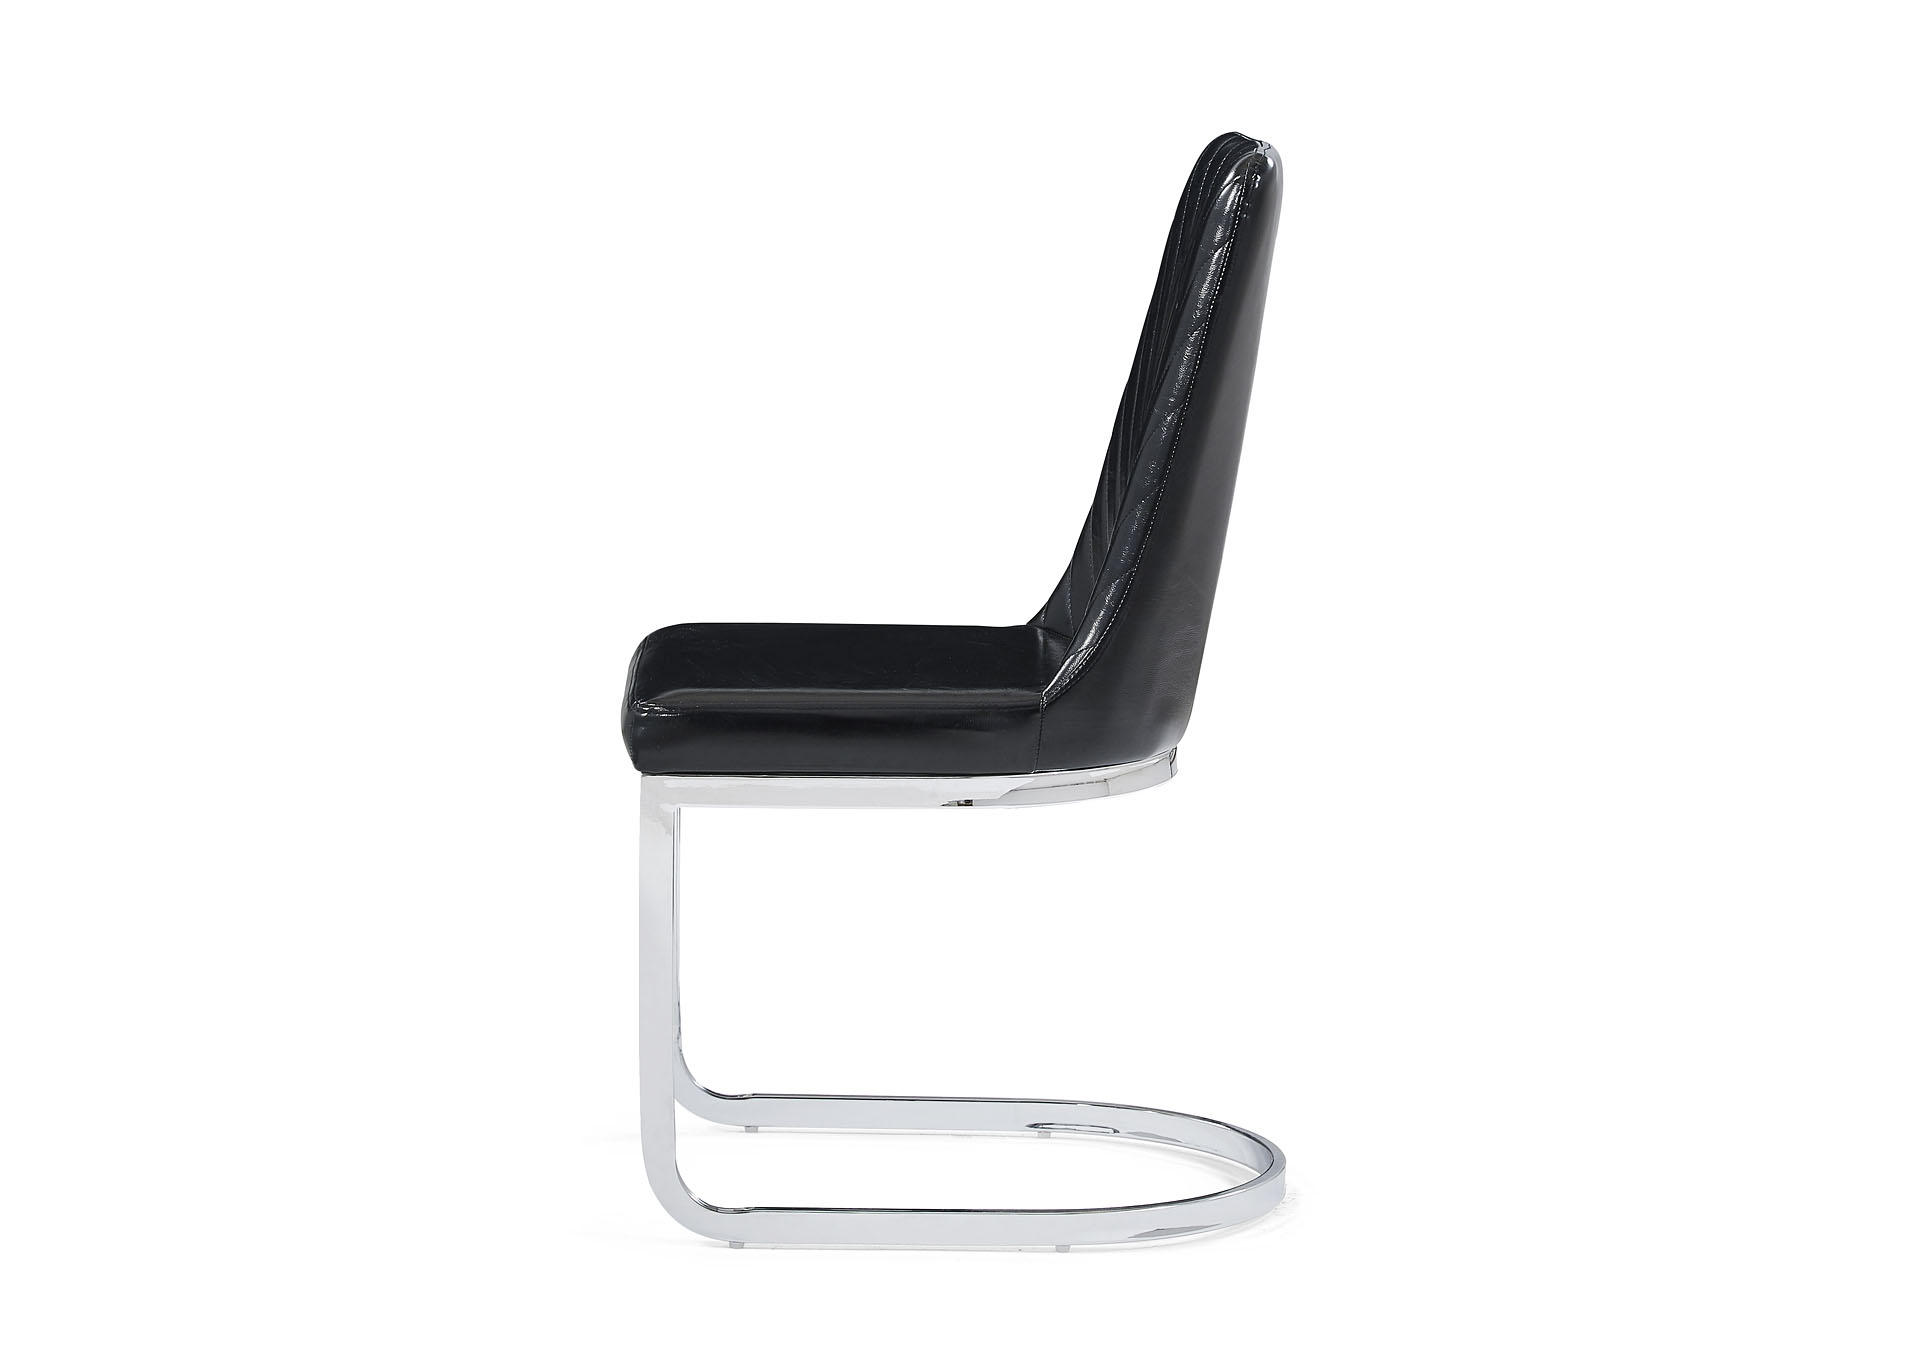 Black Dining Chair,Global Furniture USA